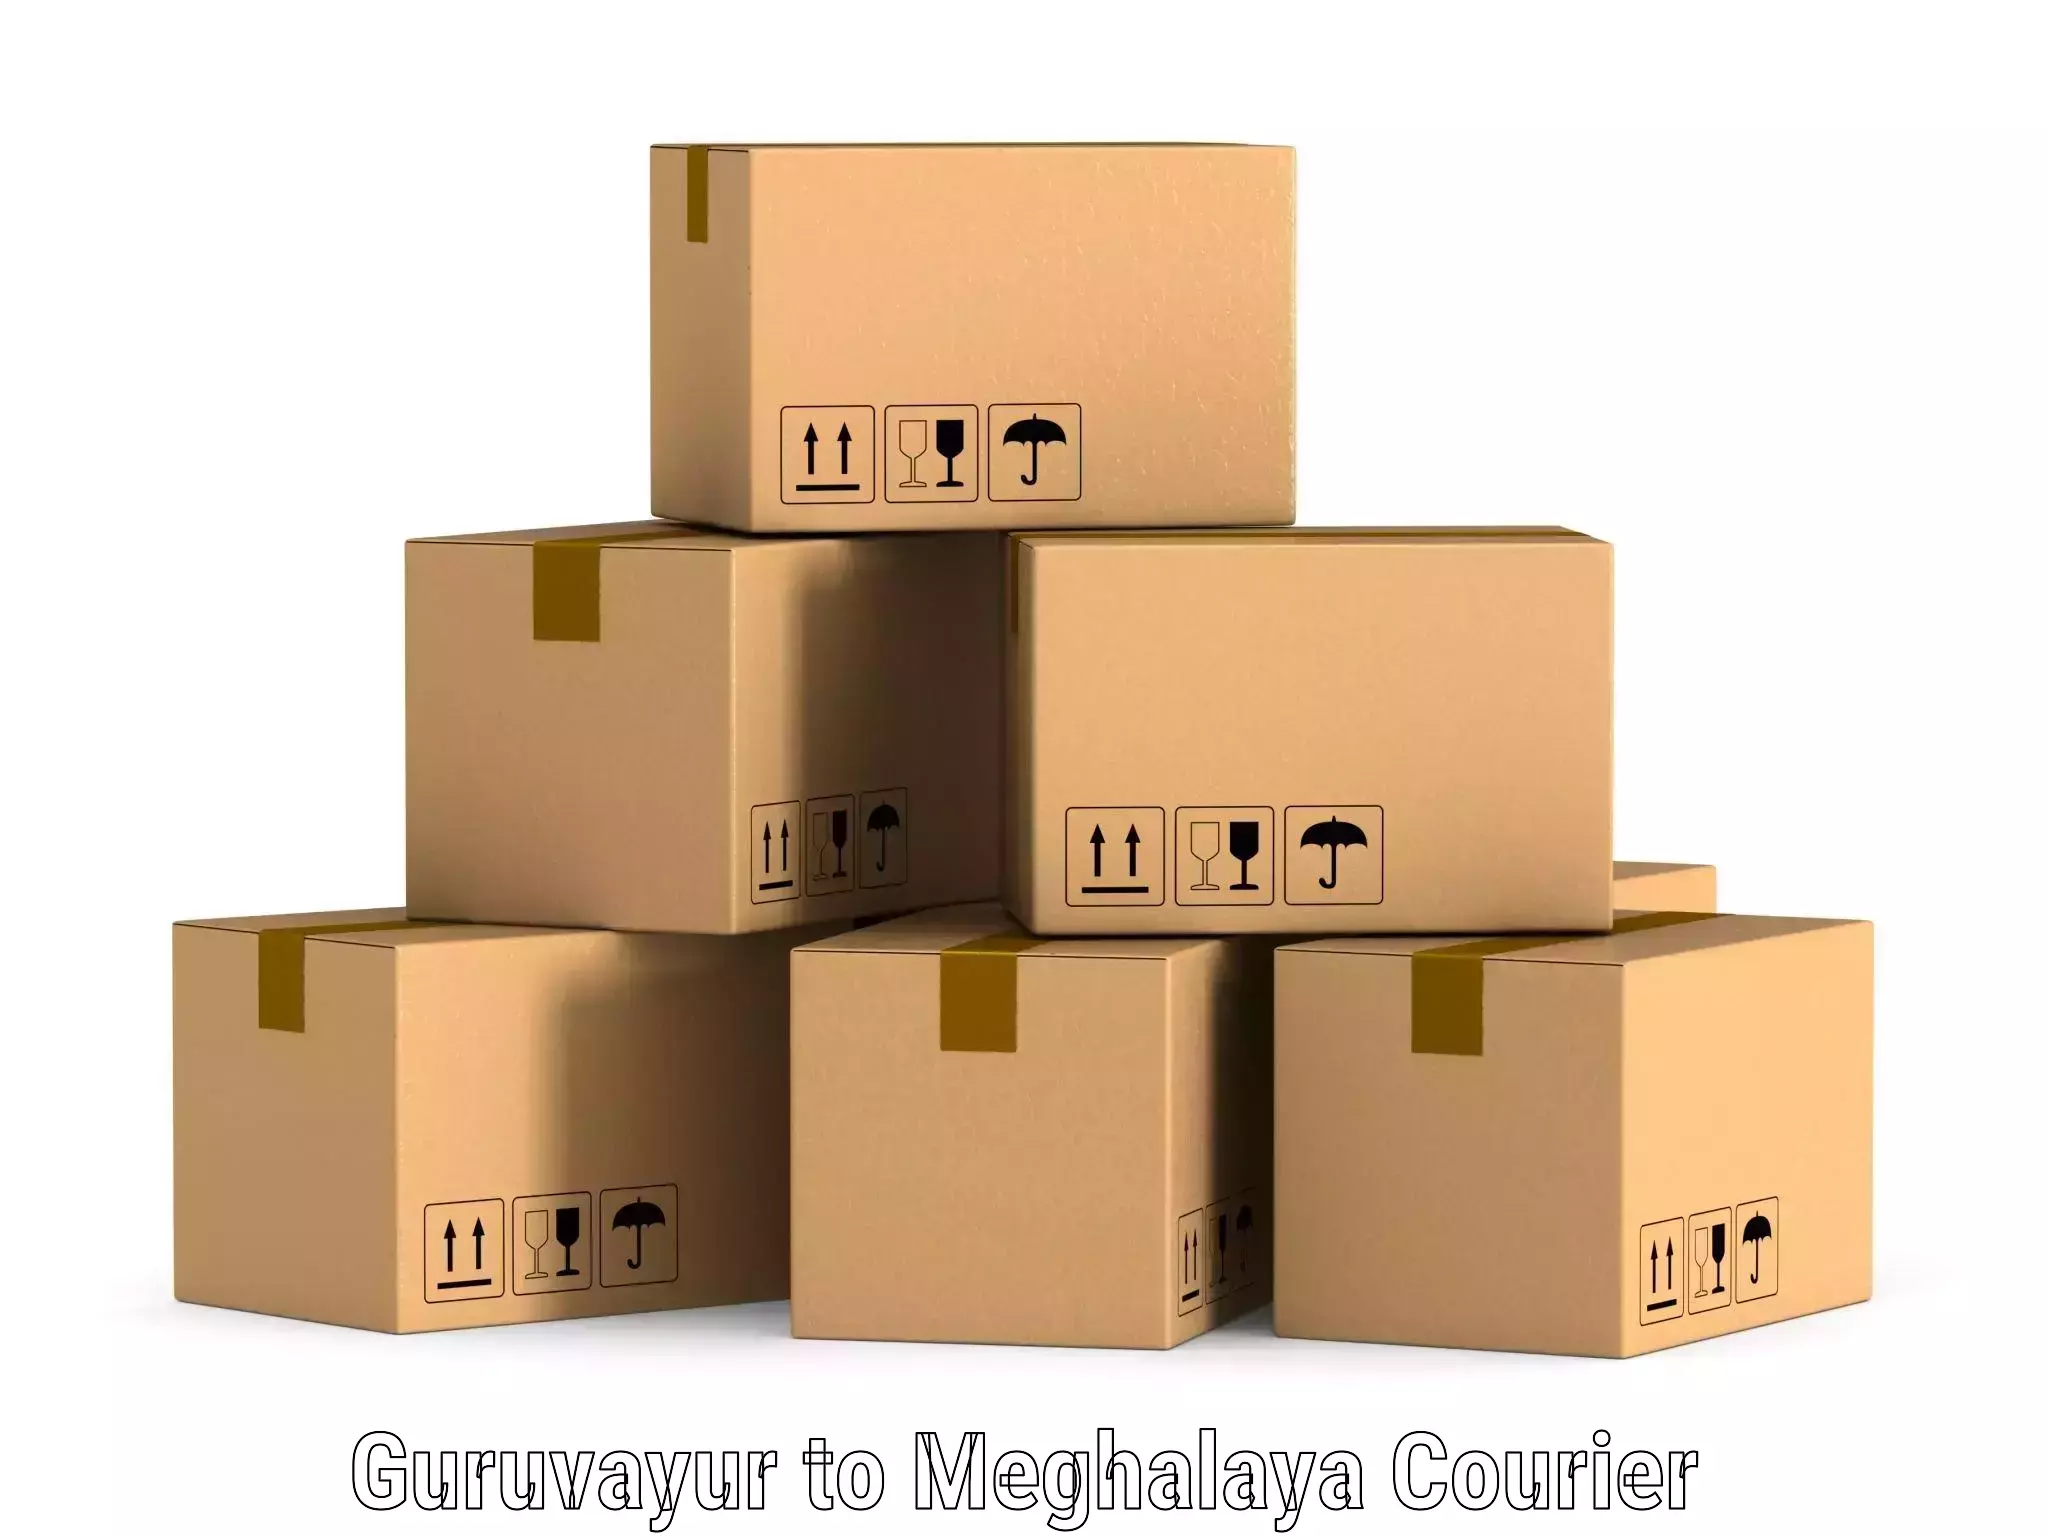 Courier service booking Guruvayur to Meghalaya